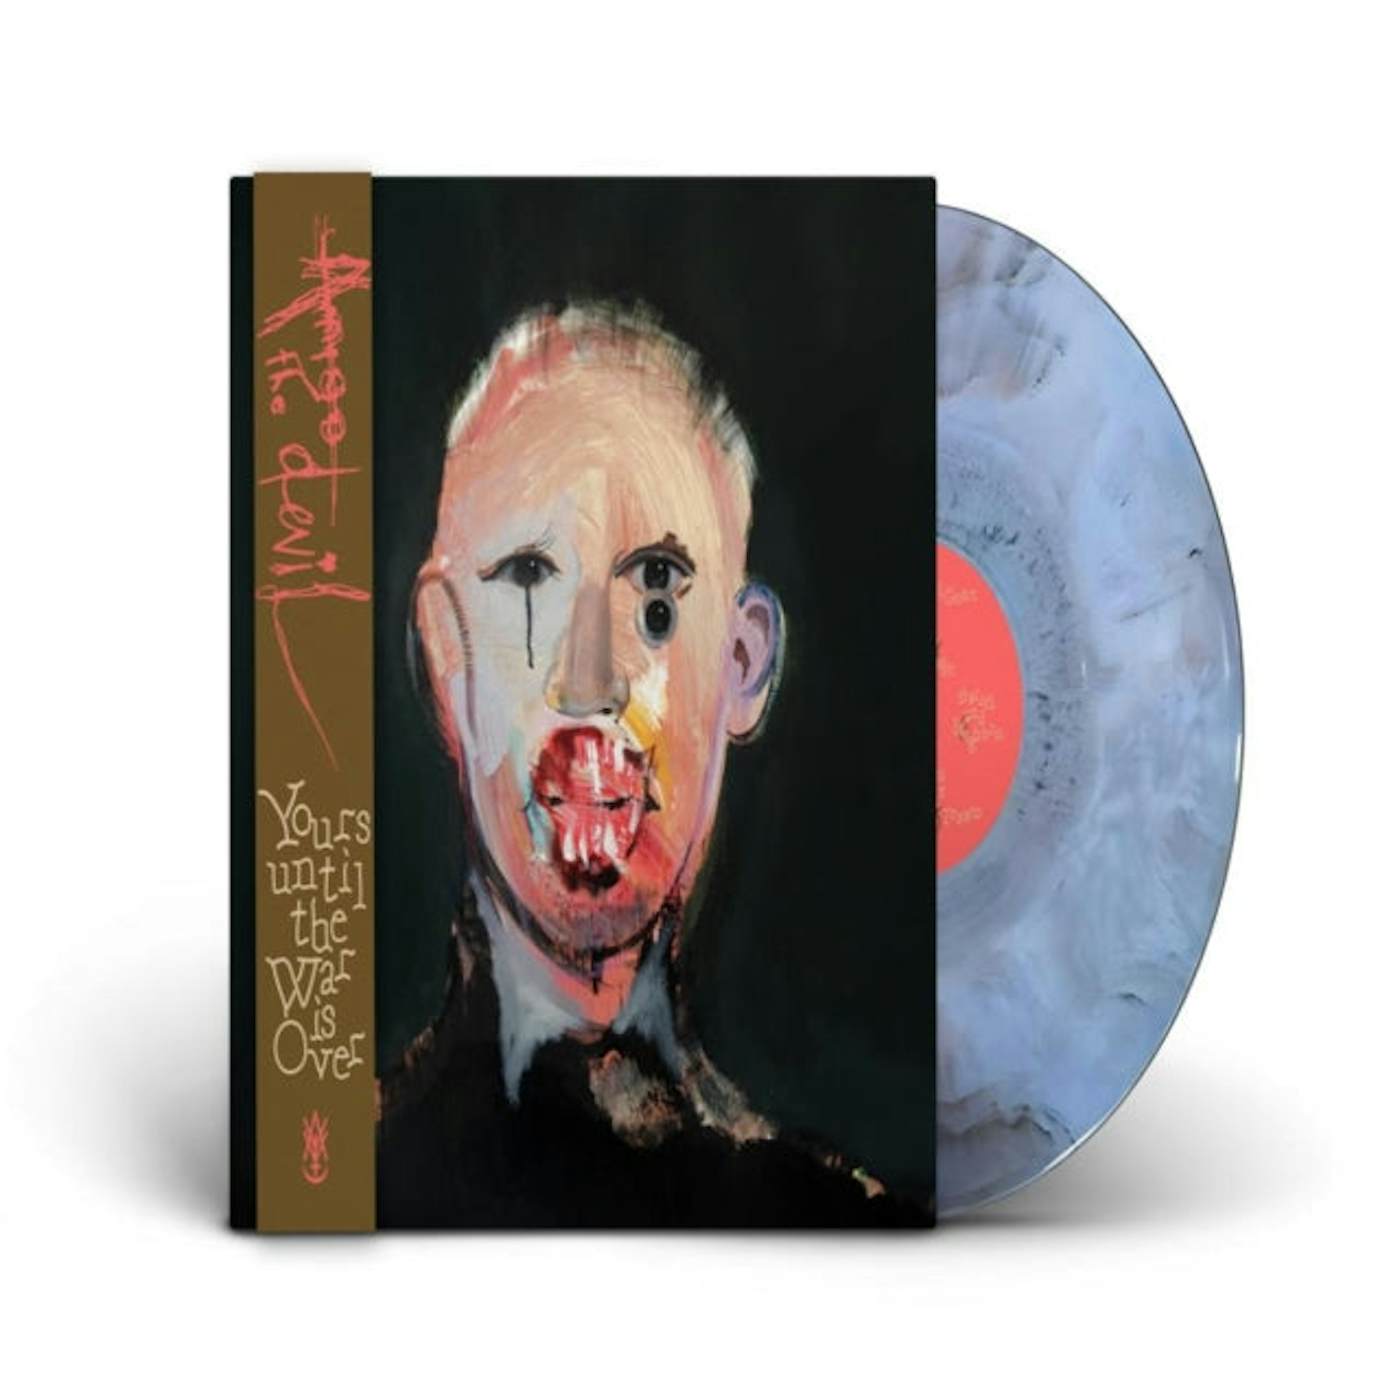 Amigo The Devil LP - Yours Until The War Is Over (Vinyl)